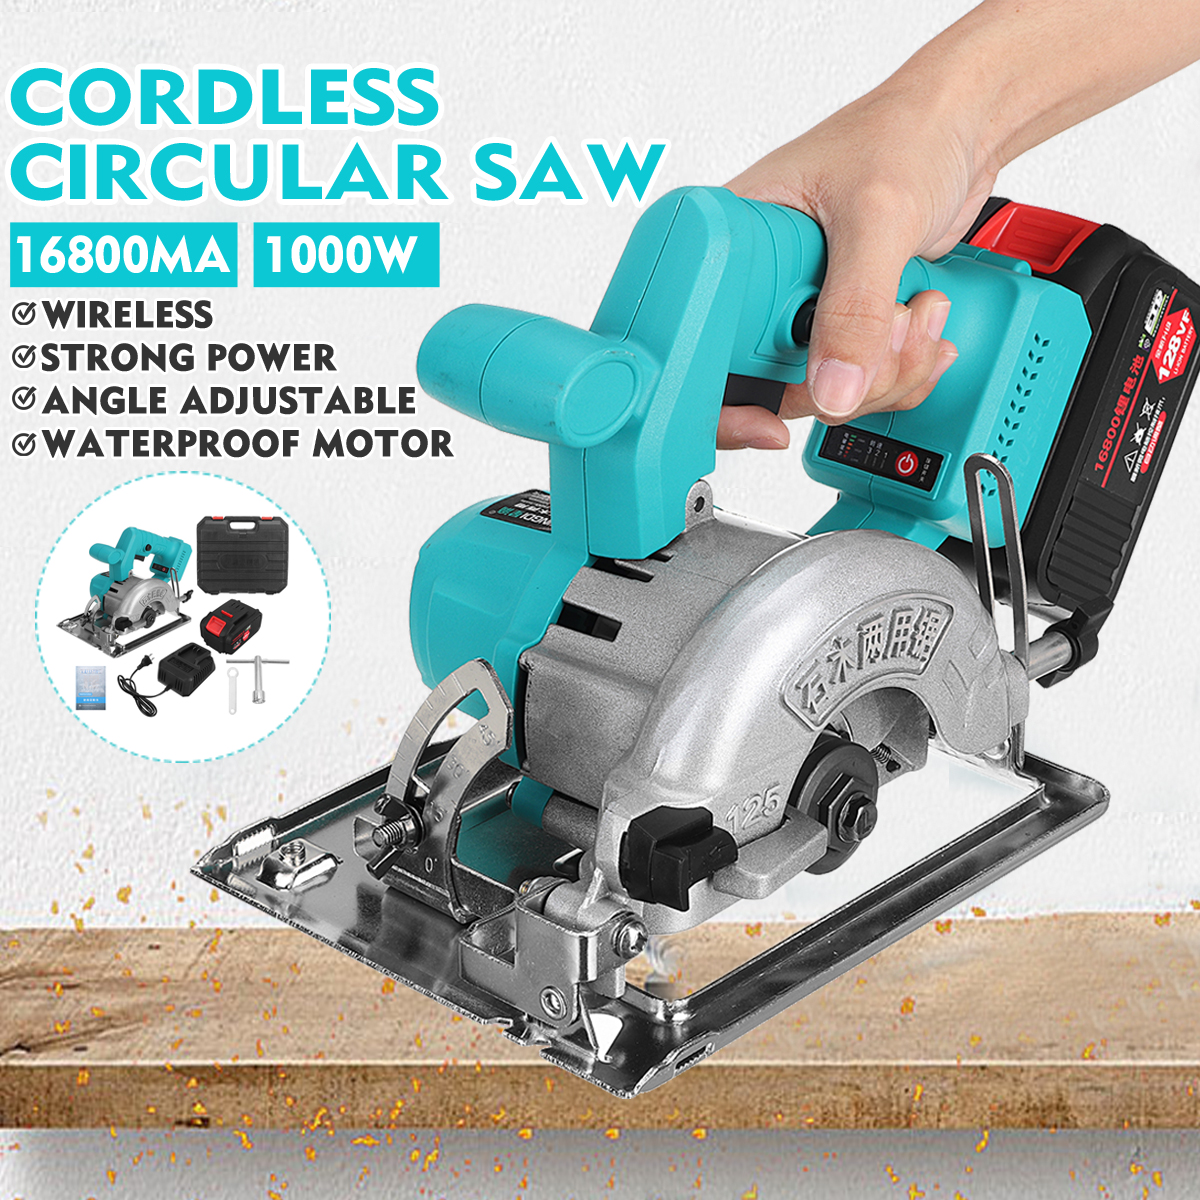 1000W-16800MA-Electric-Circular-Saw-125mm-Blade-Cordless-Circular-Saw-Angle-Adjustable-for-Woodworki-1696587-2